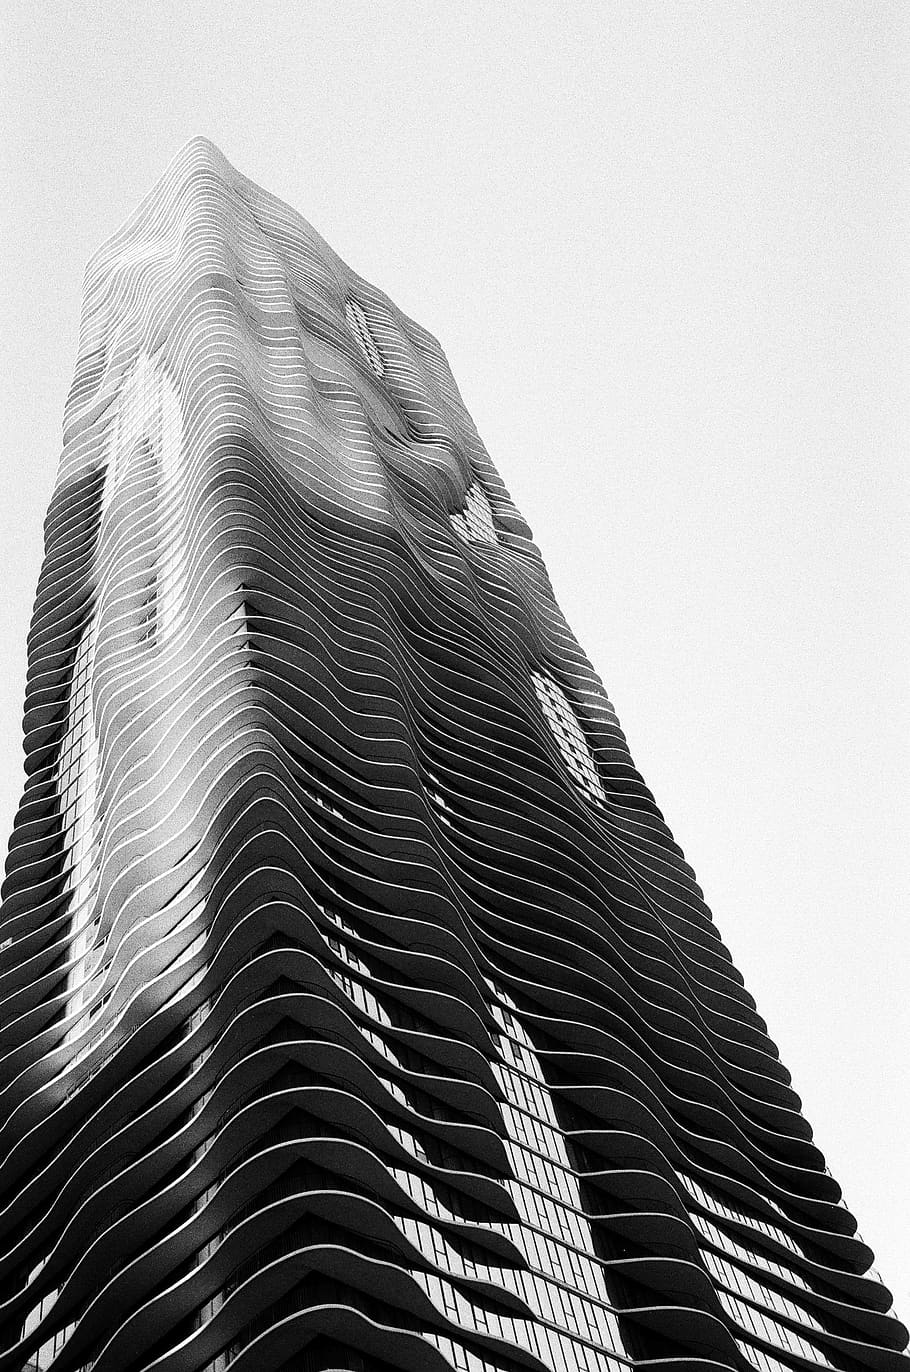 chicago, united states, architecture, black and white, aqua tower